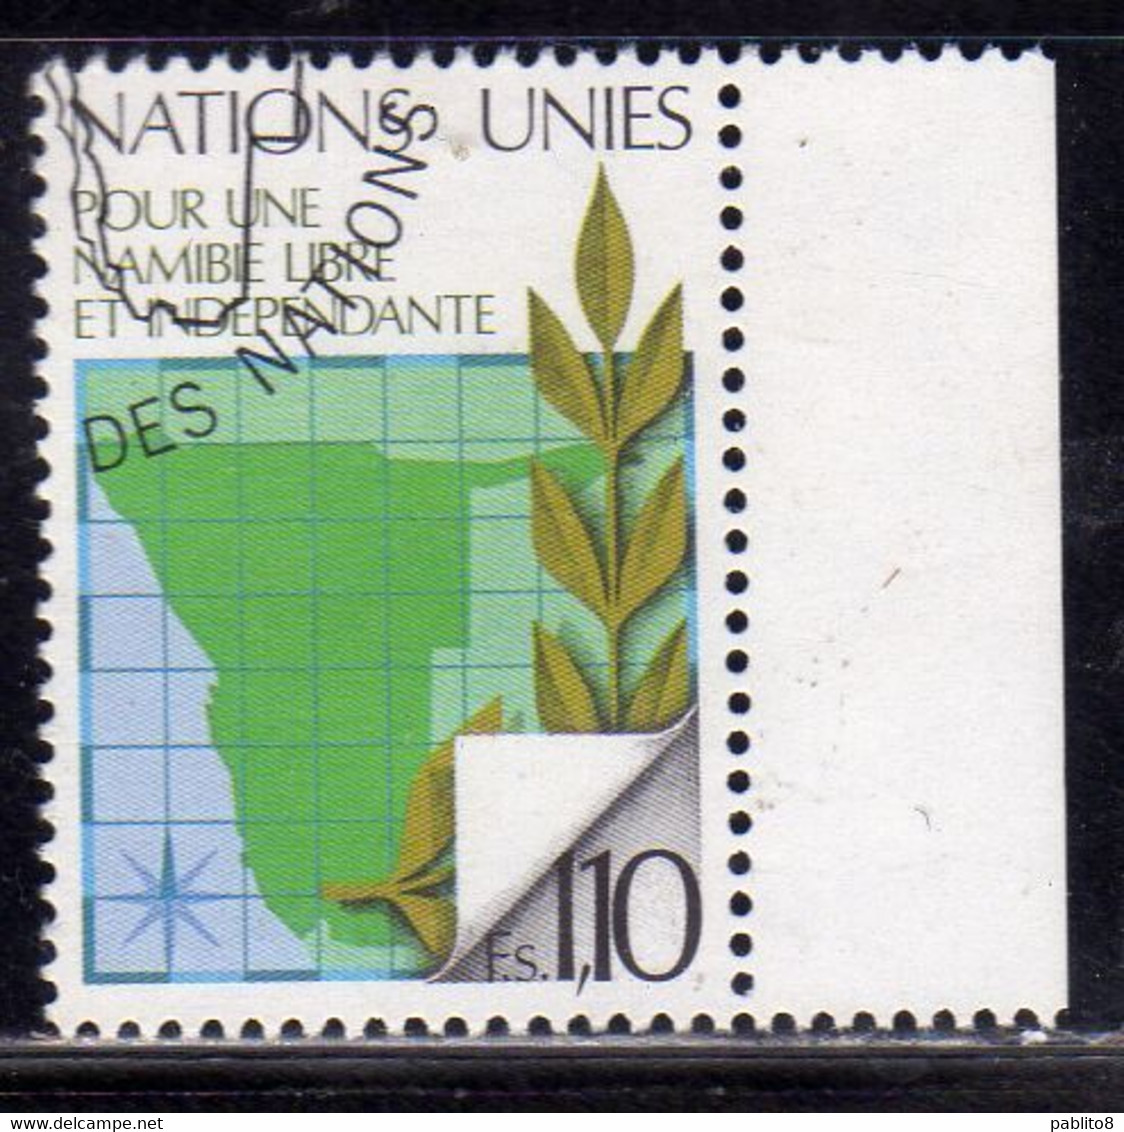 UNITED NATIONS GENEVE GINEVRA GENEVA ONU UN UNO 1979 NAMIBIA INDEPENDENT LIBRE INDEPENDANTE 1.10fr USATO USED OBLITERE' - Oblitérés